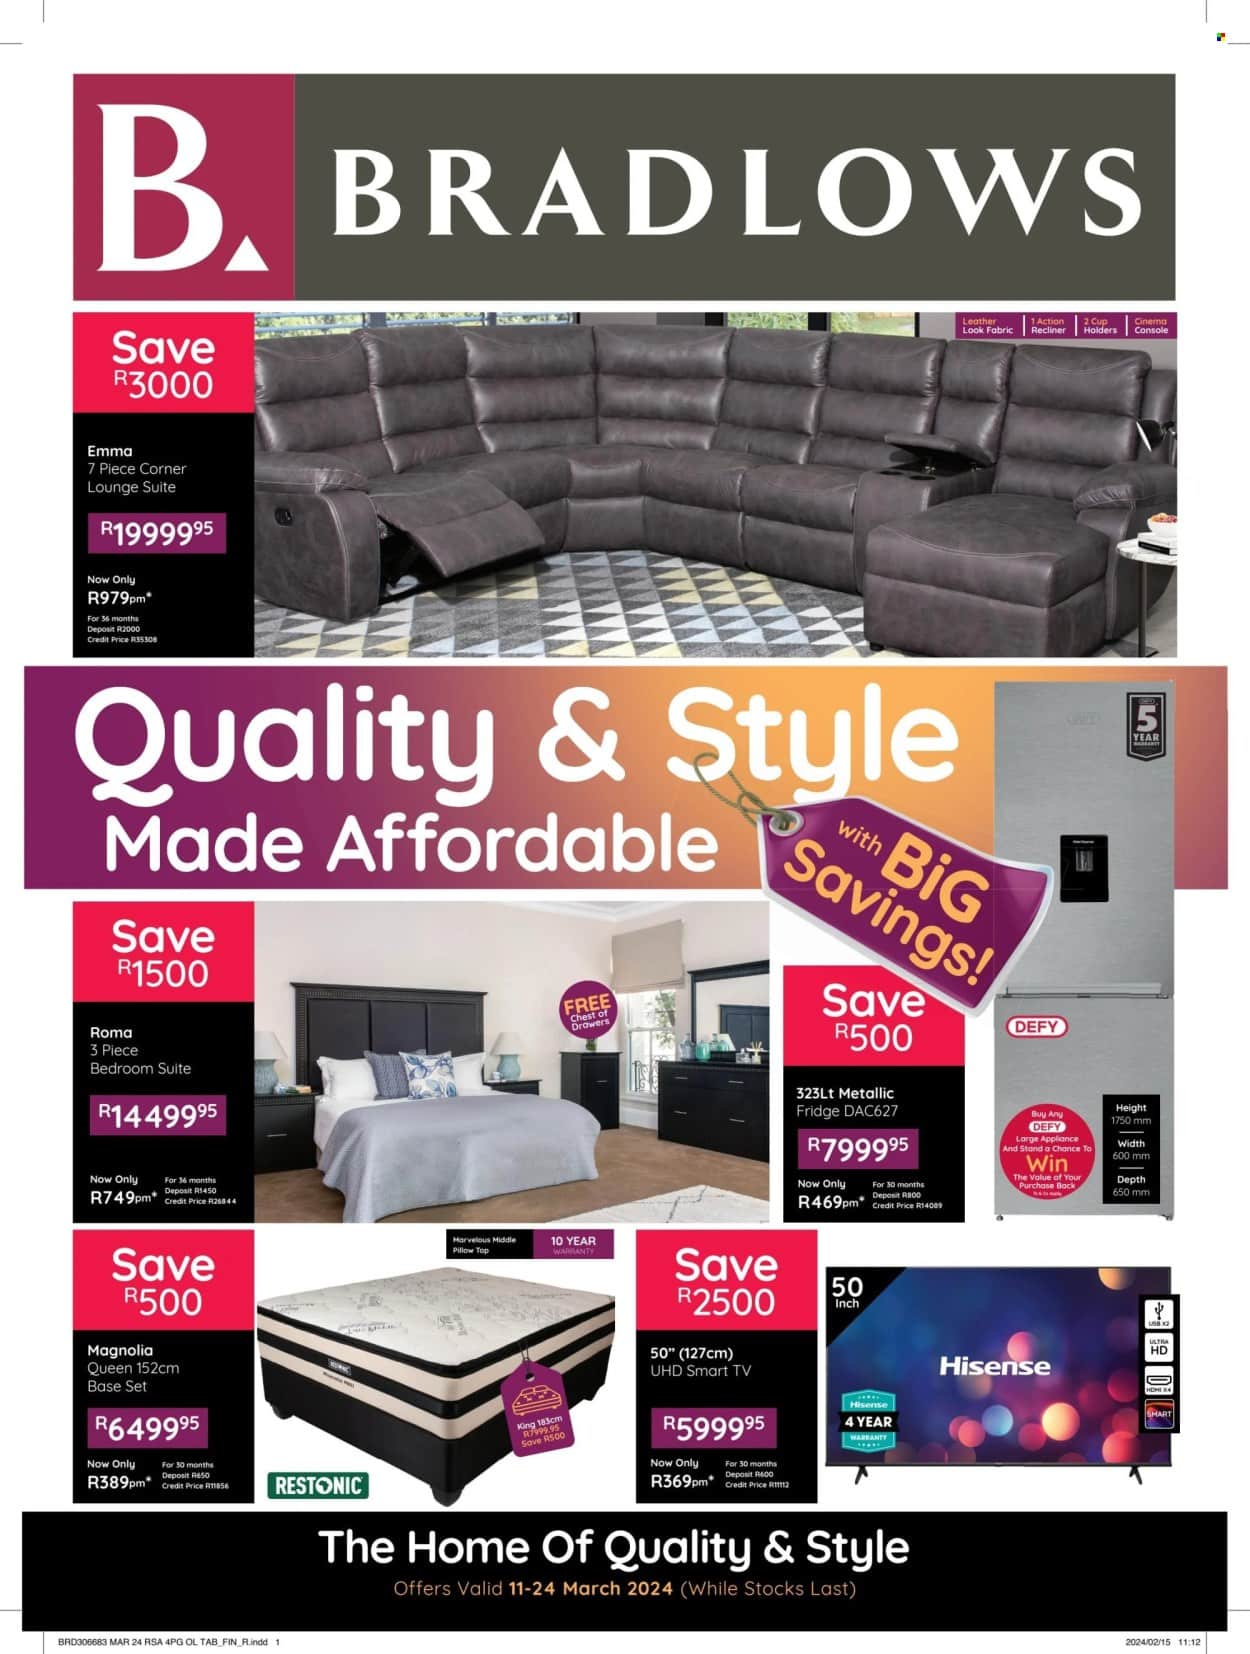 Bradlows Specials 11 March - 24 March, 2024. Furniture Deals